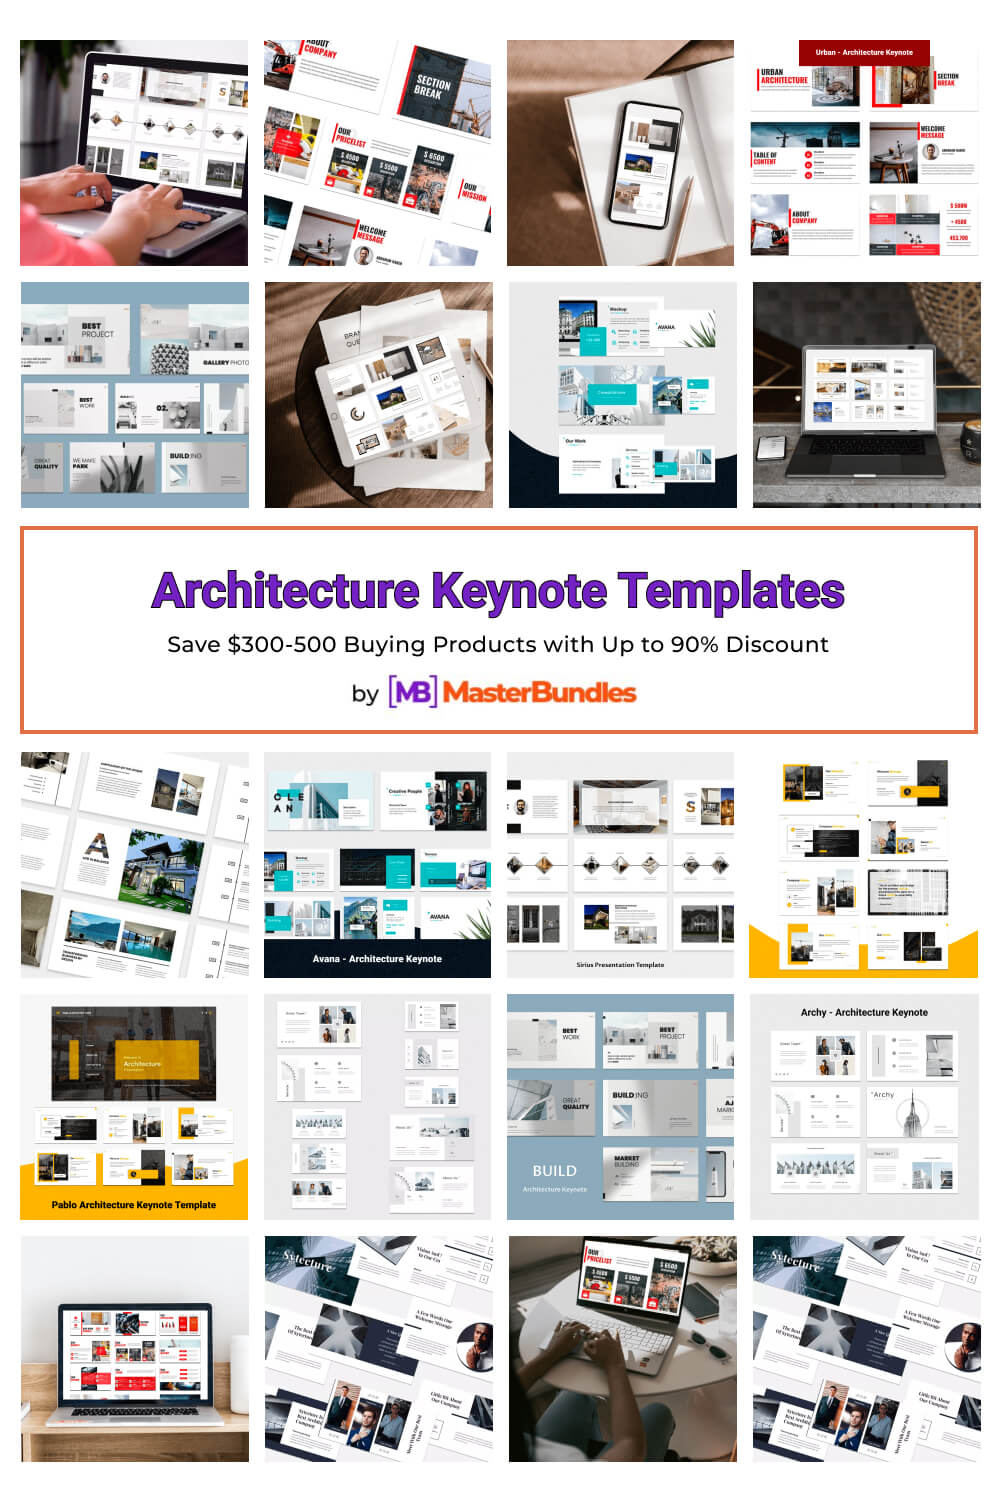 architecture keynote templates pinterest image.